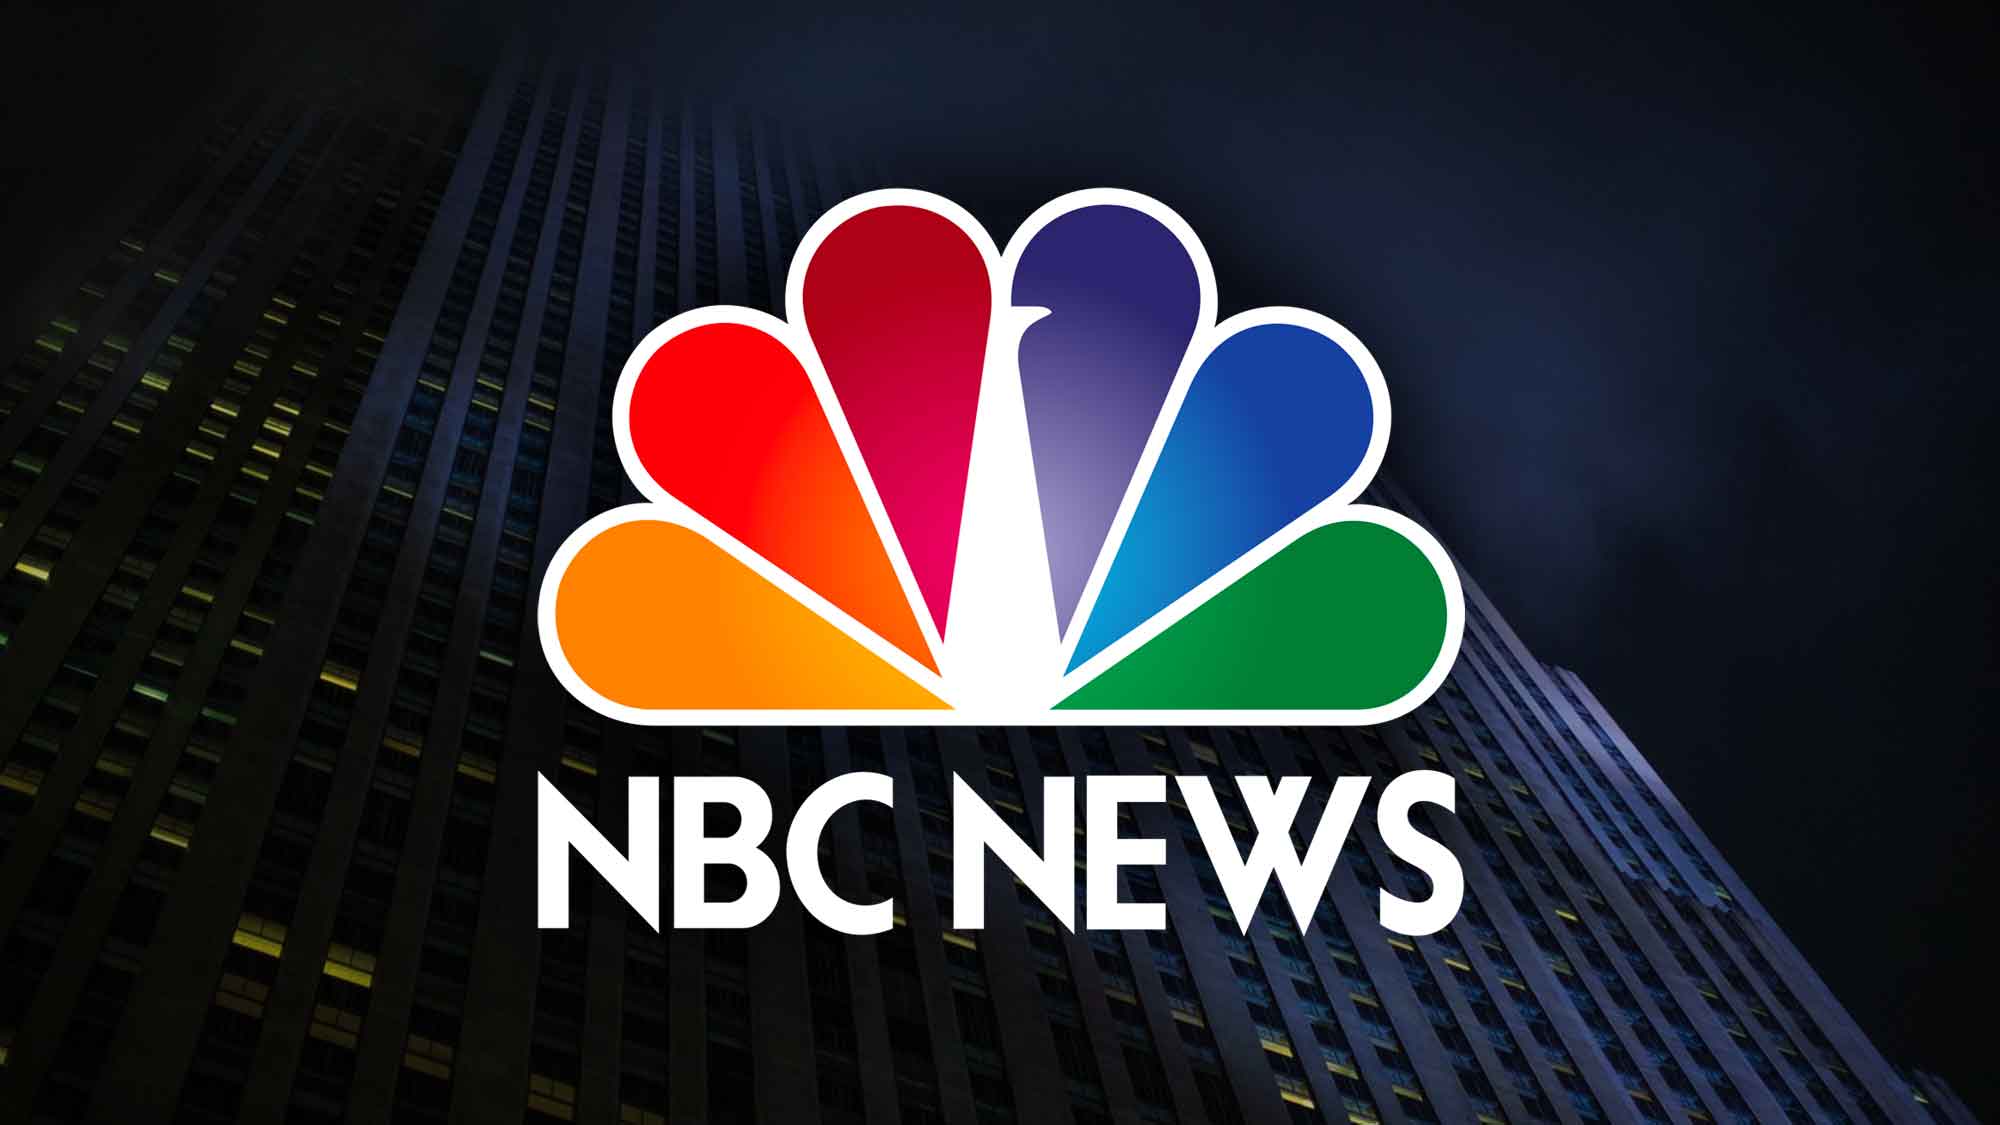 Newsroom Coffee And Sugar Habits At NBC News